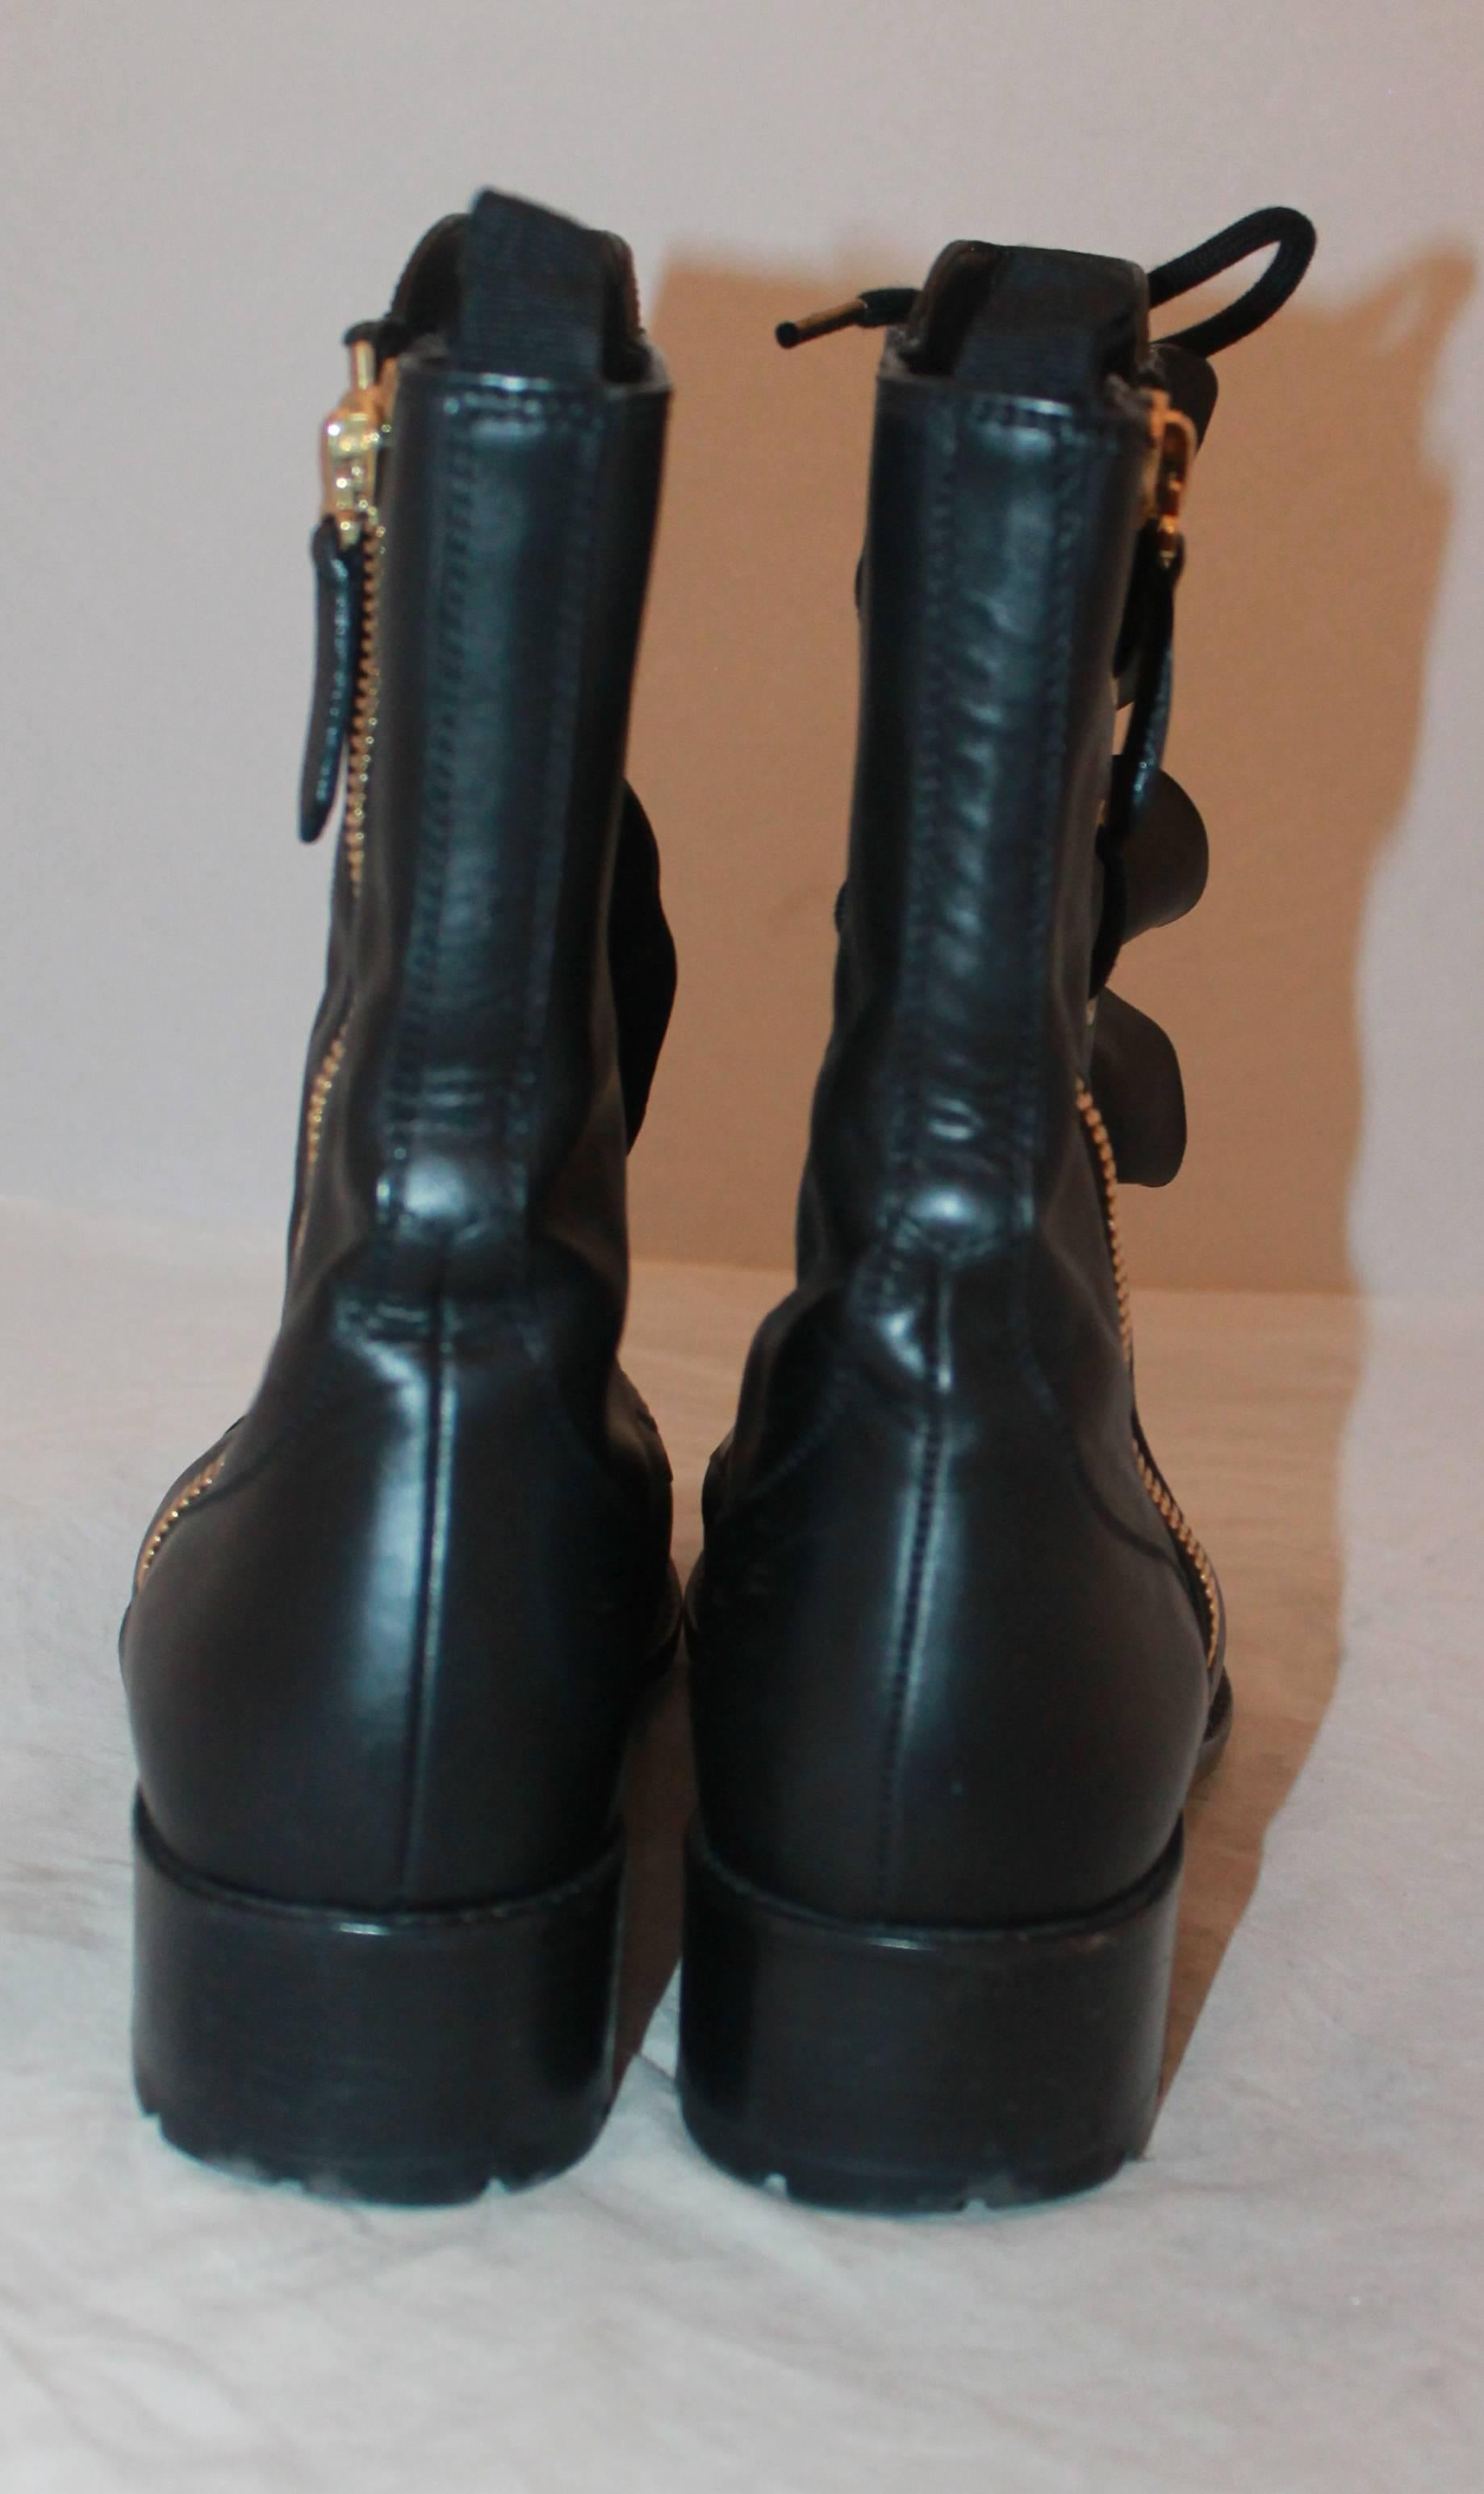 Women's Valentino Black Leather Ruffle Combat Boots - 38 - Retail: $1200